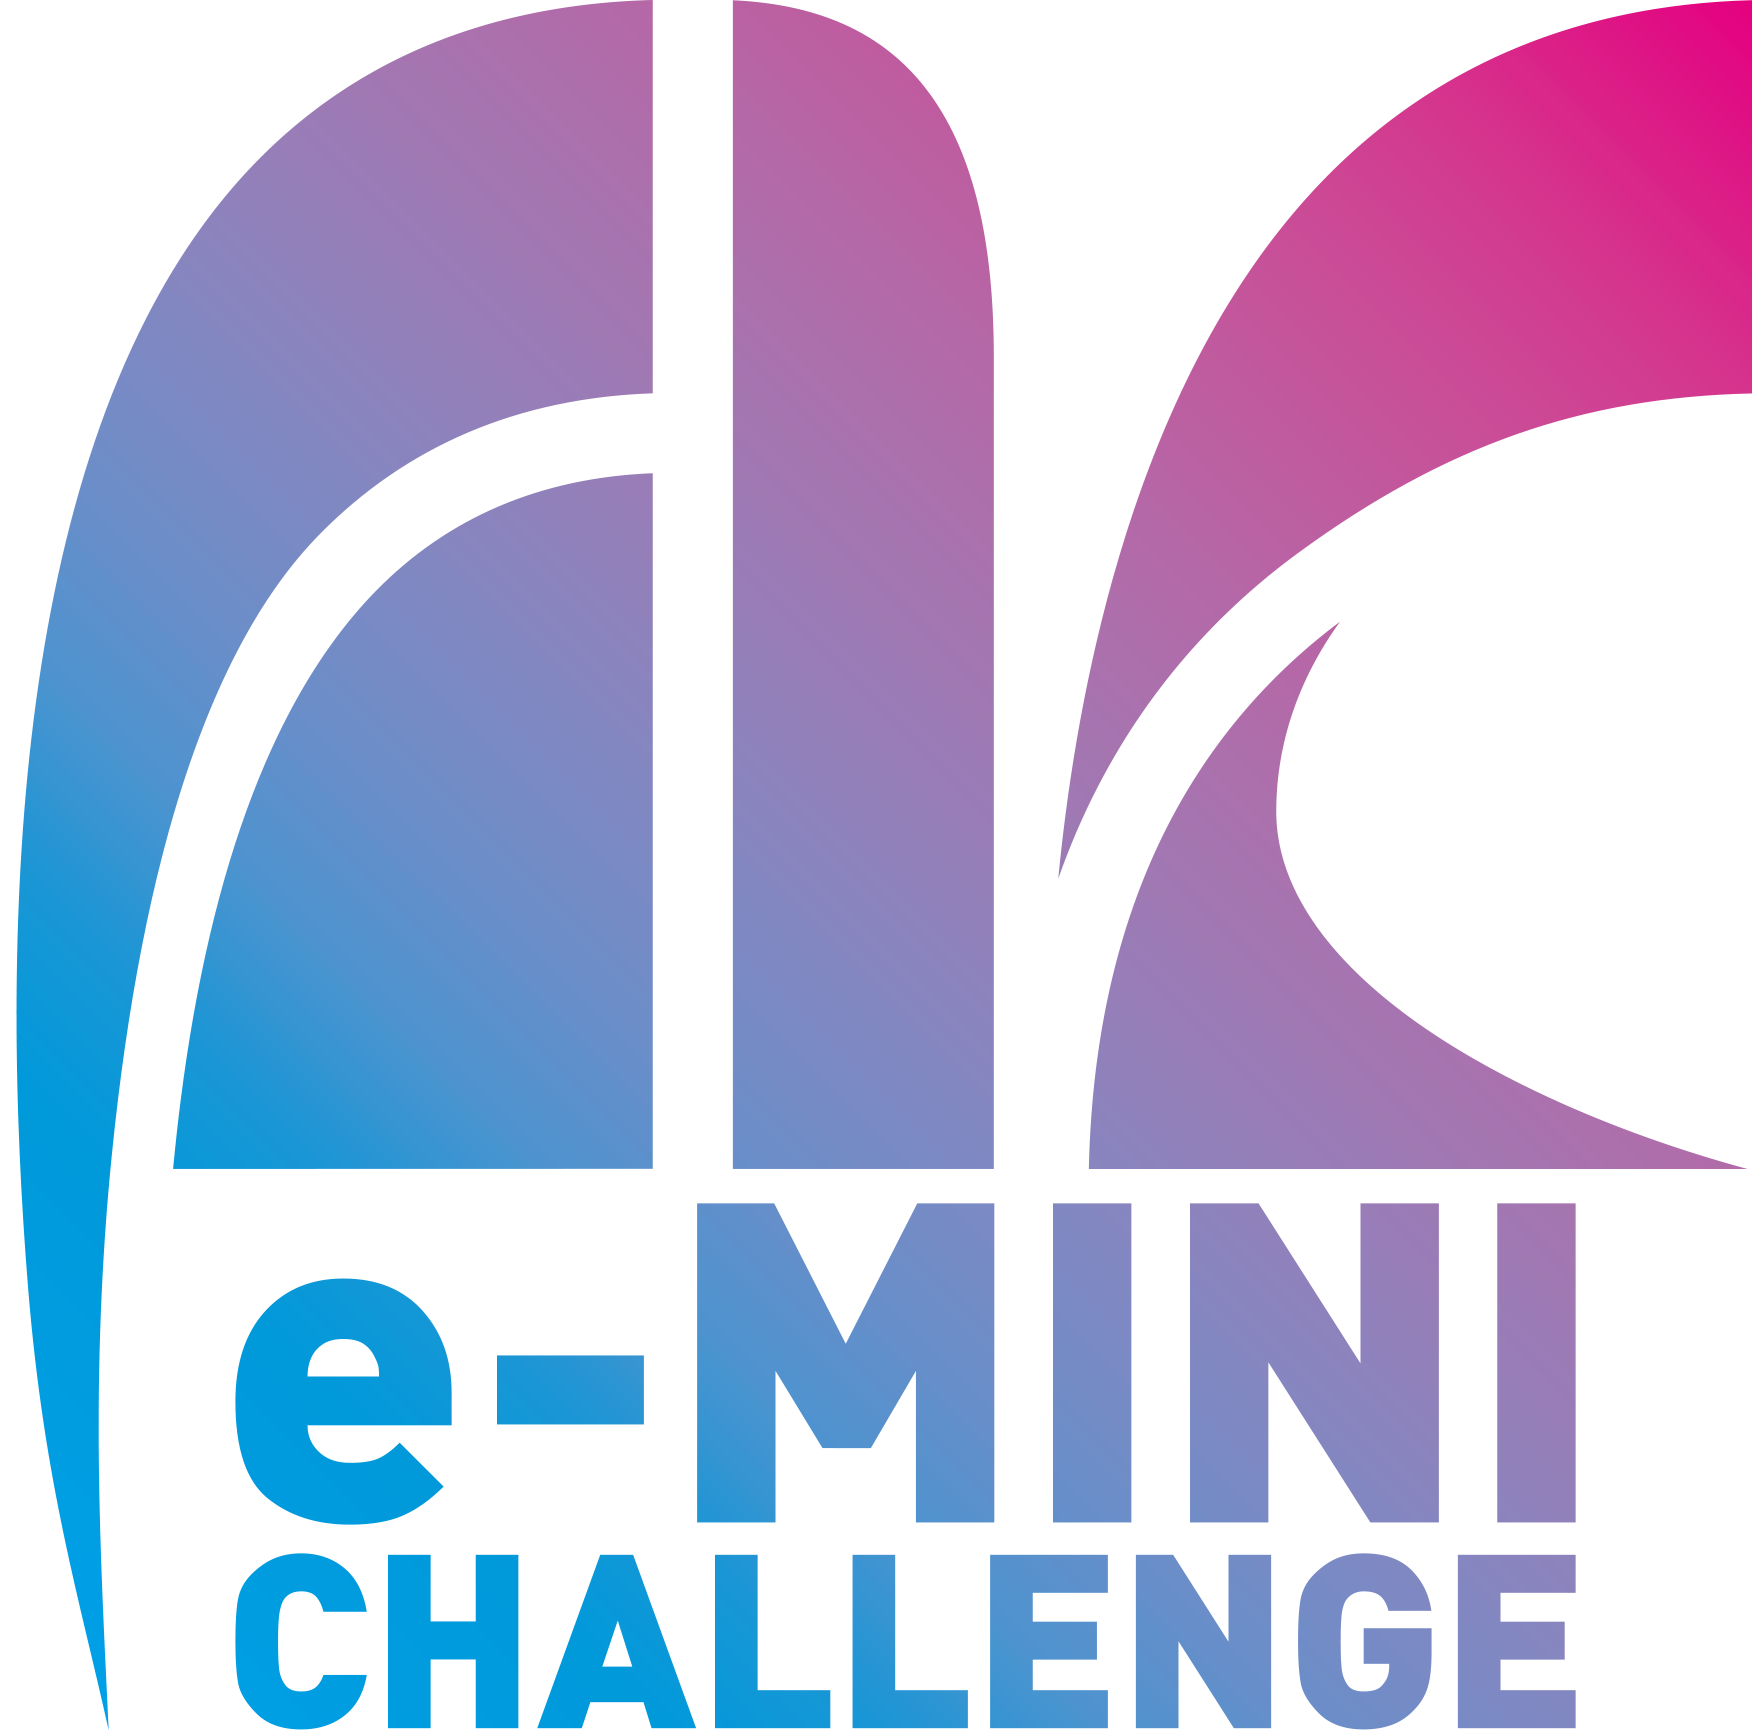 e-MINI CHALLENGE® 2020 S1 Rd.6 ポイントランキング更新